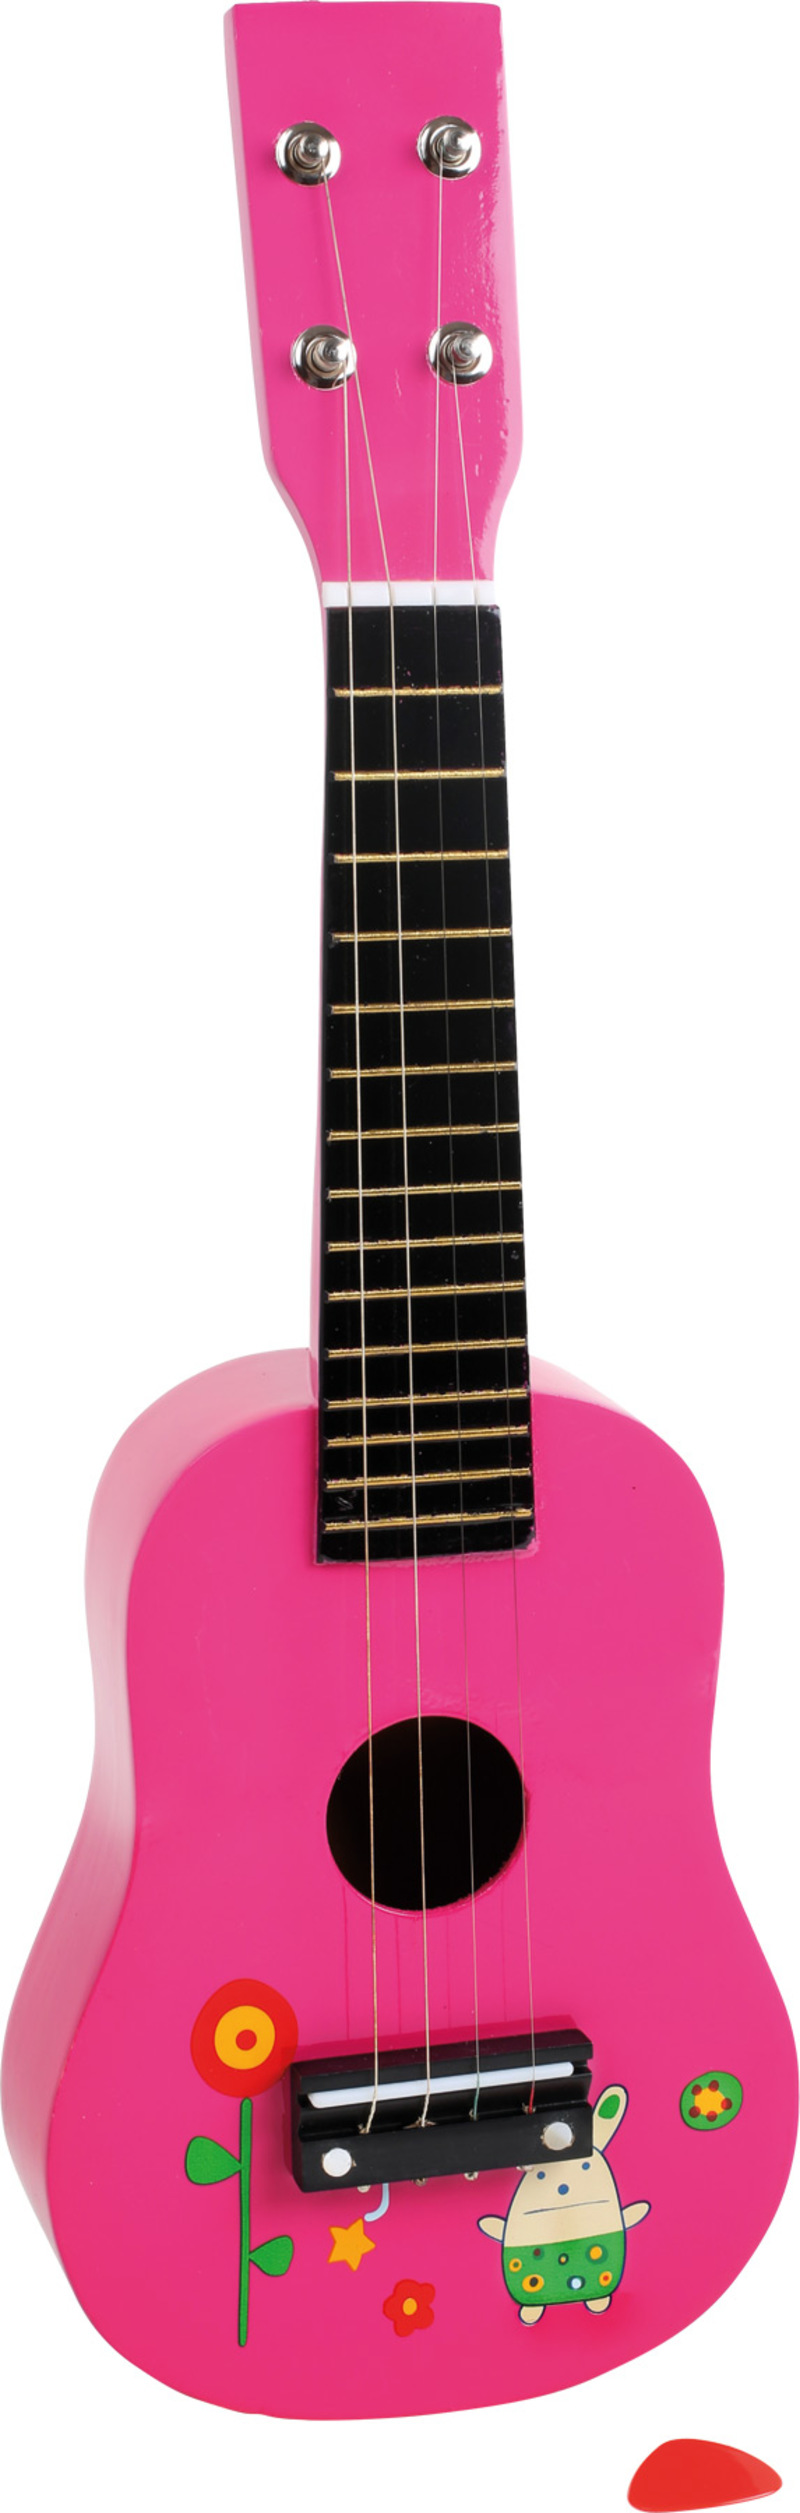 Guitar, pink